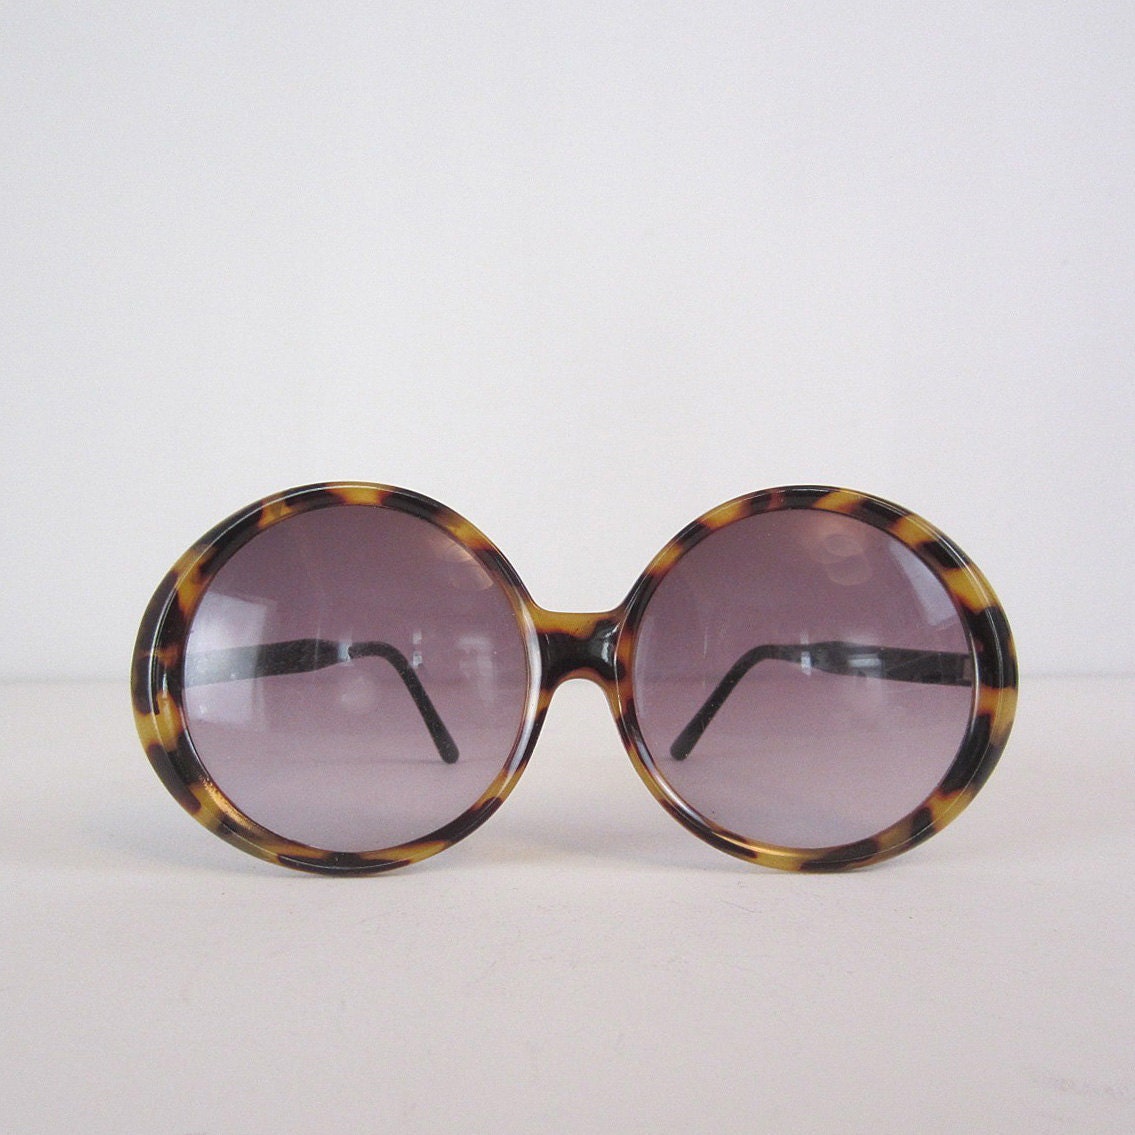 Vintage 70s Oversized Sunglasses. Tortoiseshell. Round Frame.